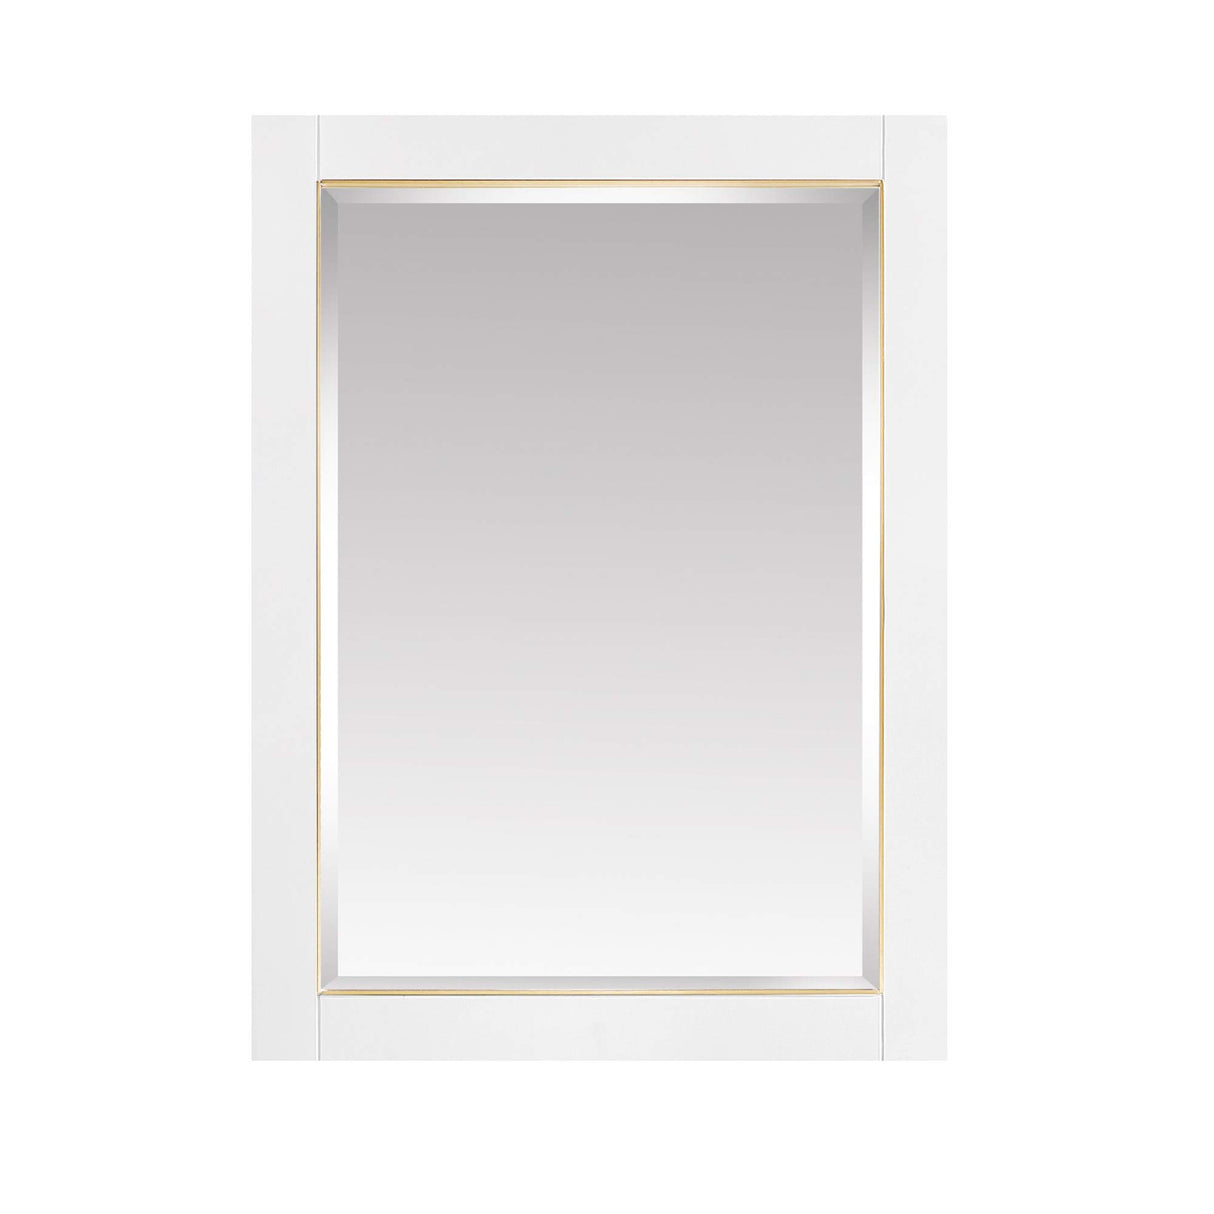 Avanity 22 in. Mirror Cabinet for Allie / Austen in White with Gold Trim